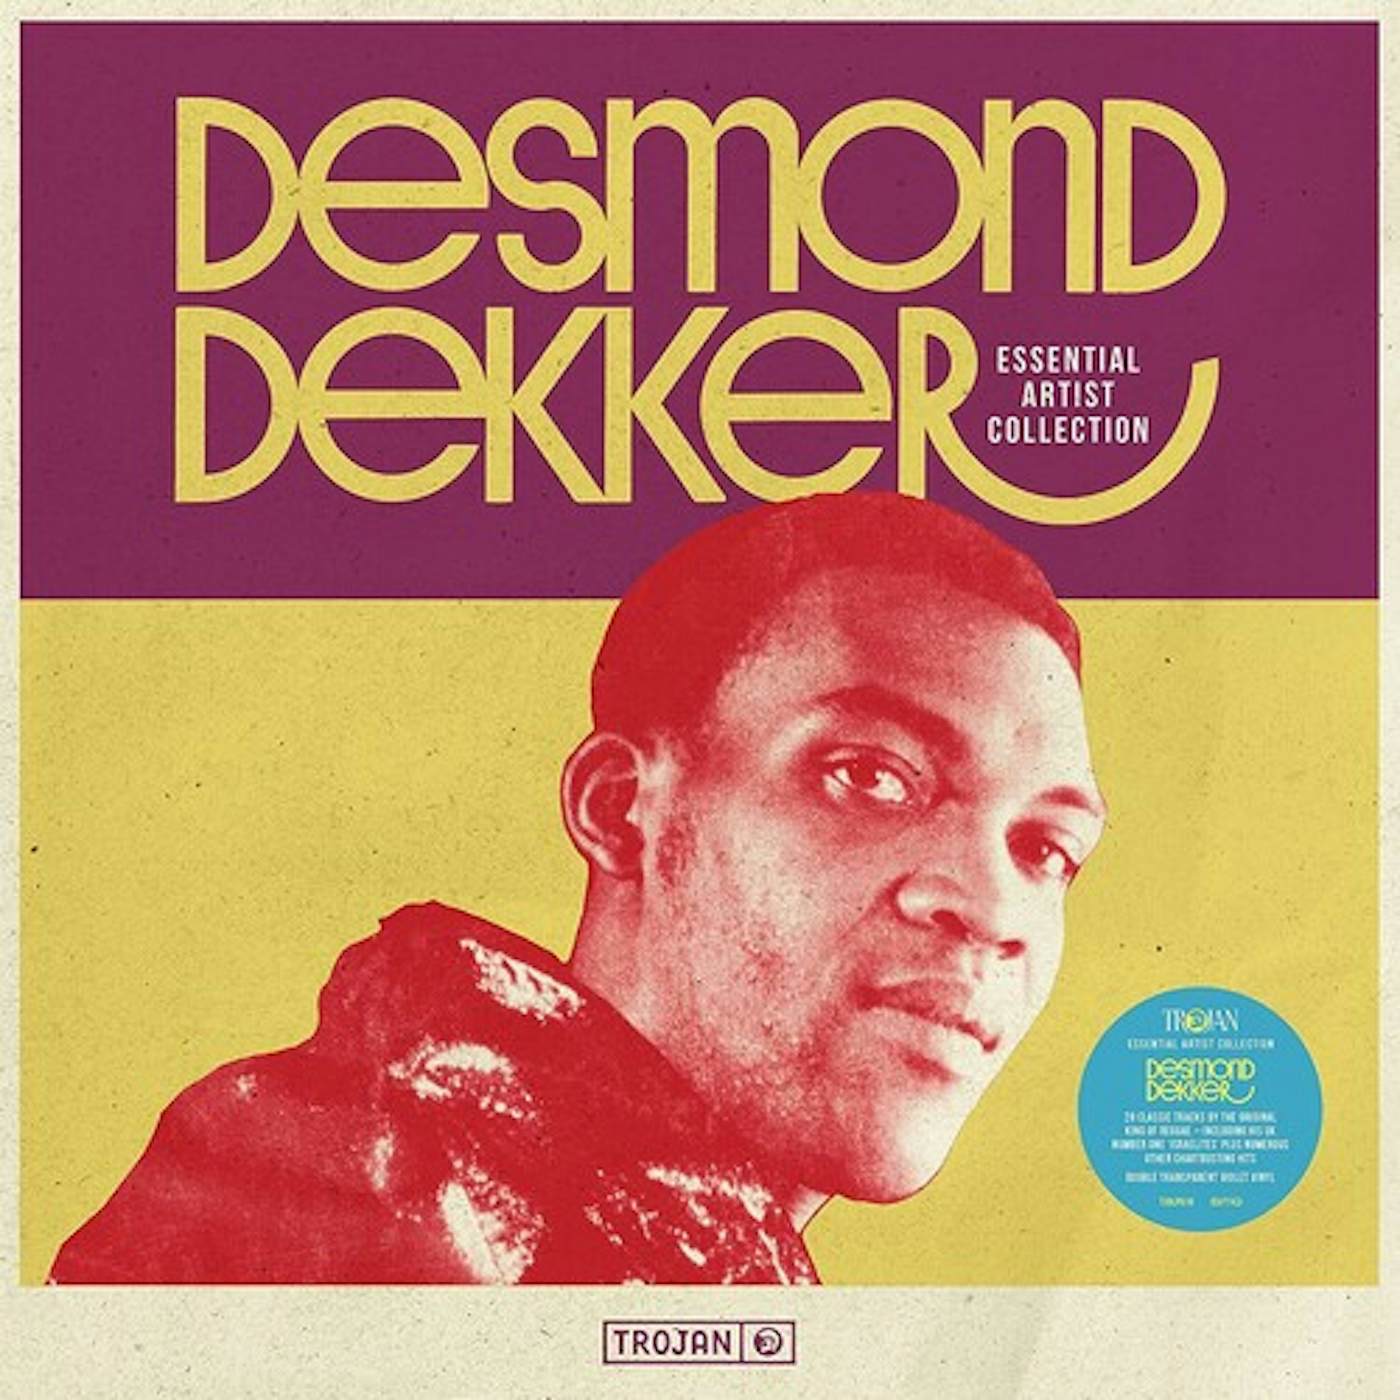 Essential Artist Collection - Desmond Dekker Vinyl Record